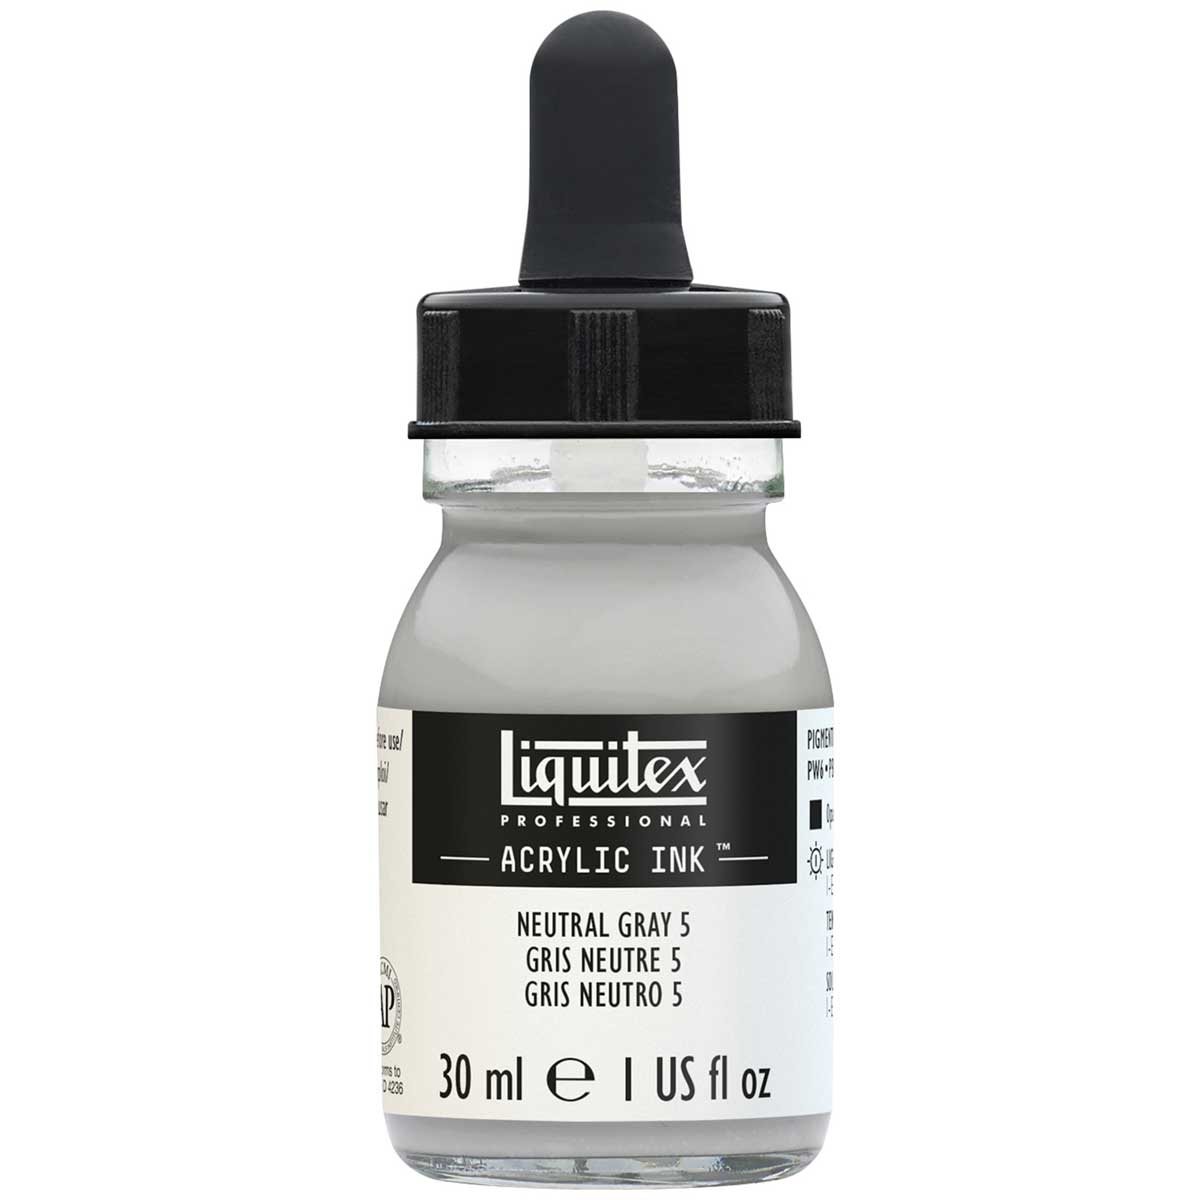 Liquitex Professional Acrylic Ink - Neutral Grey Value 5 30ml/1oz